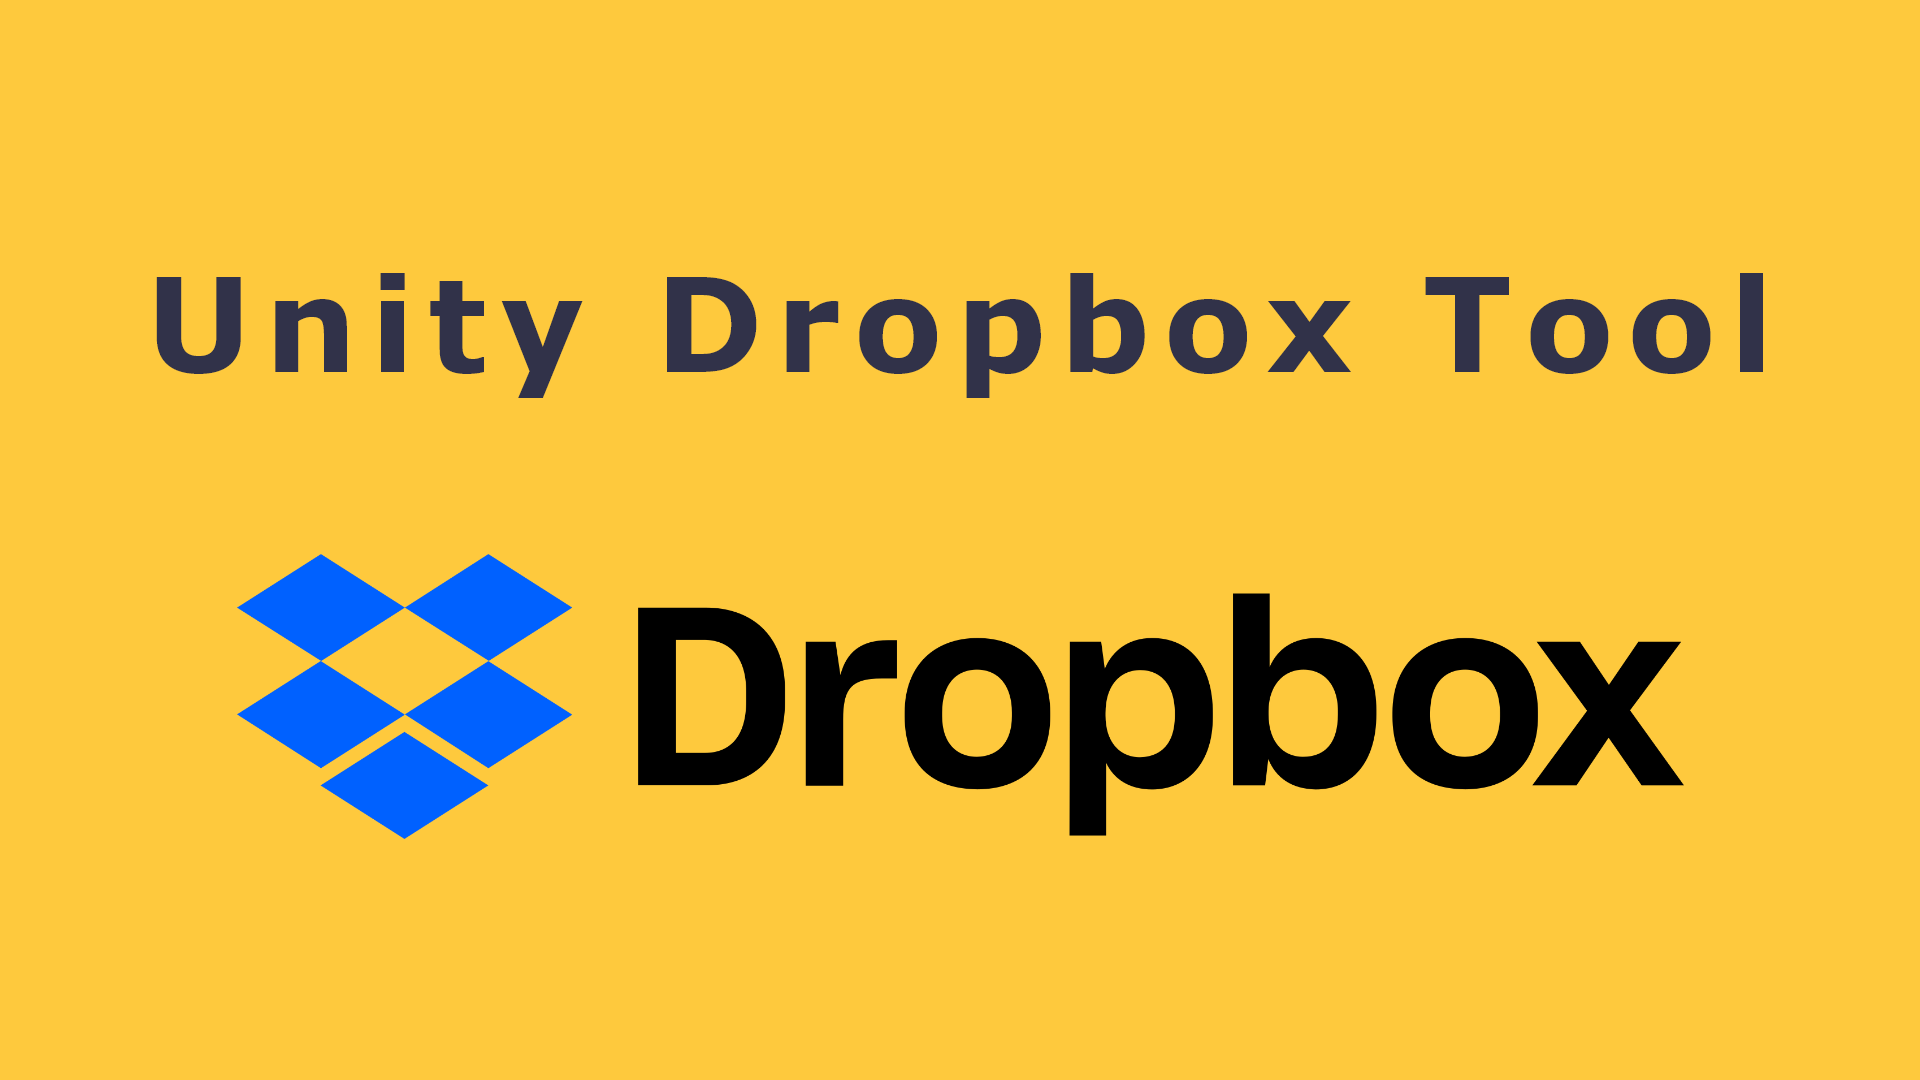 Unity Dropbox Tool